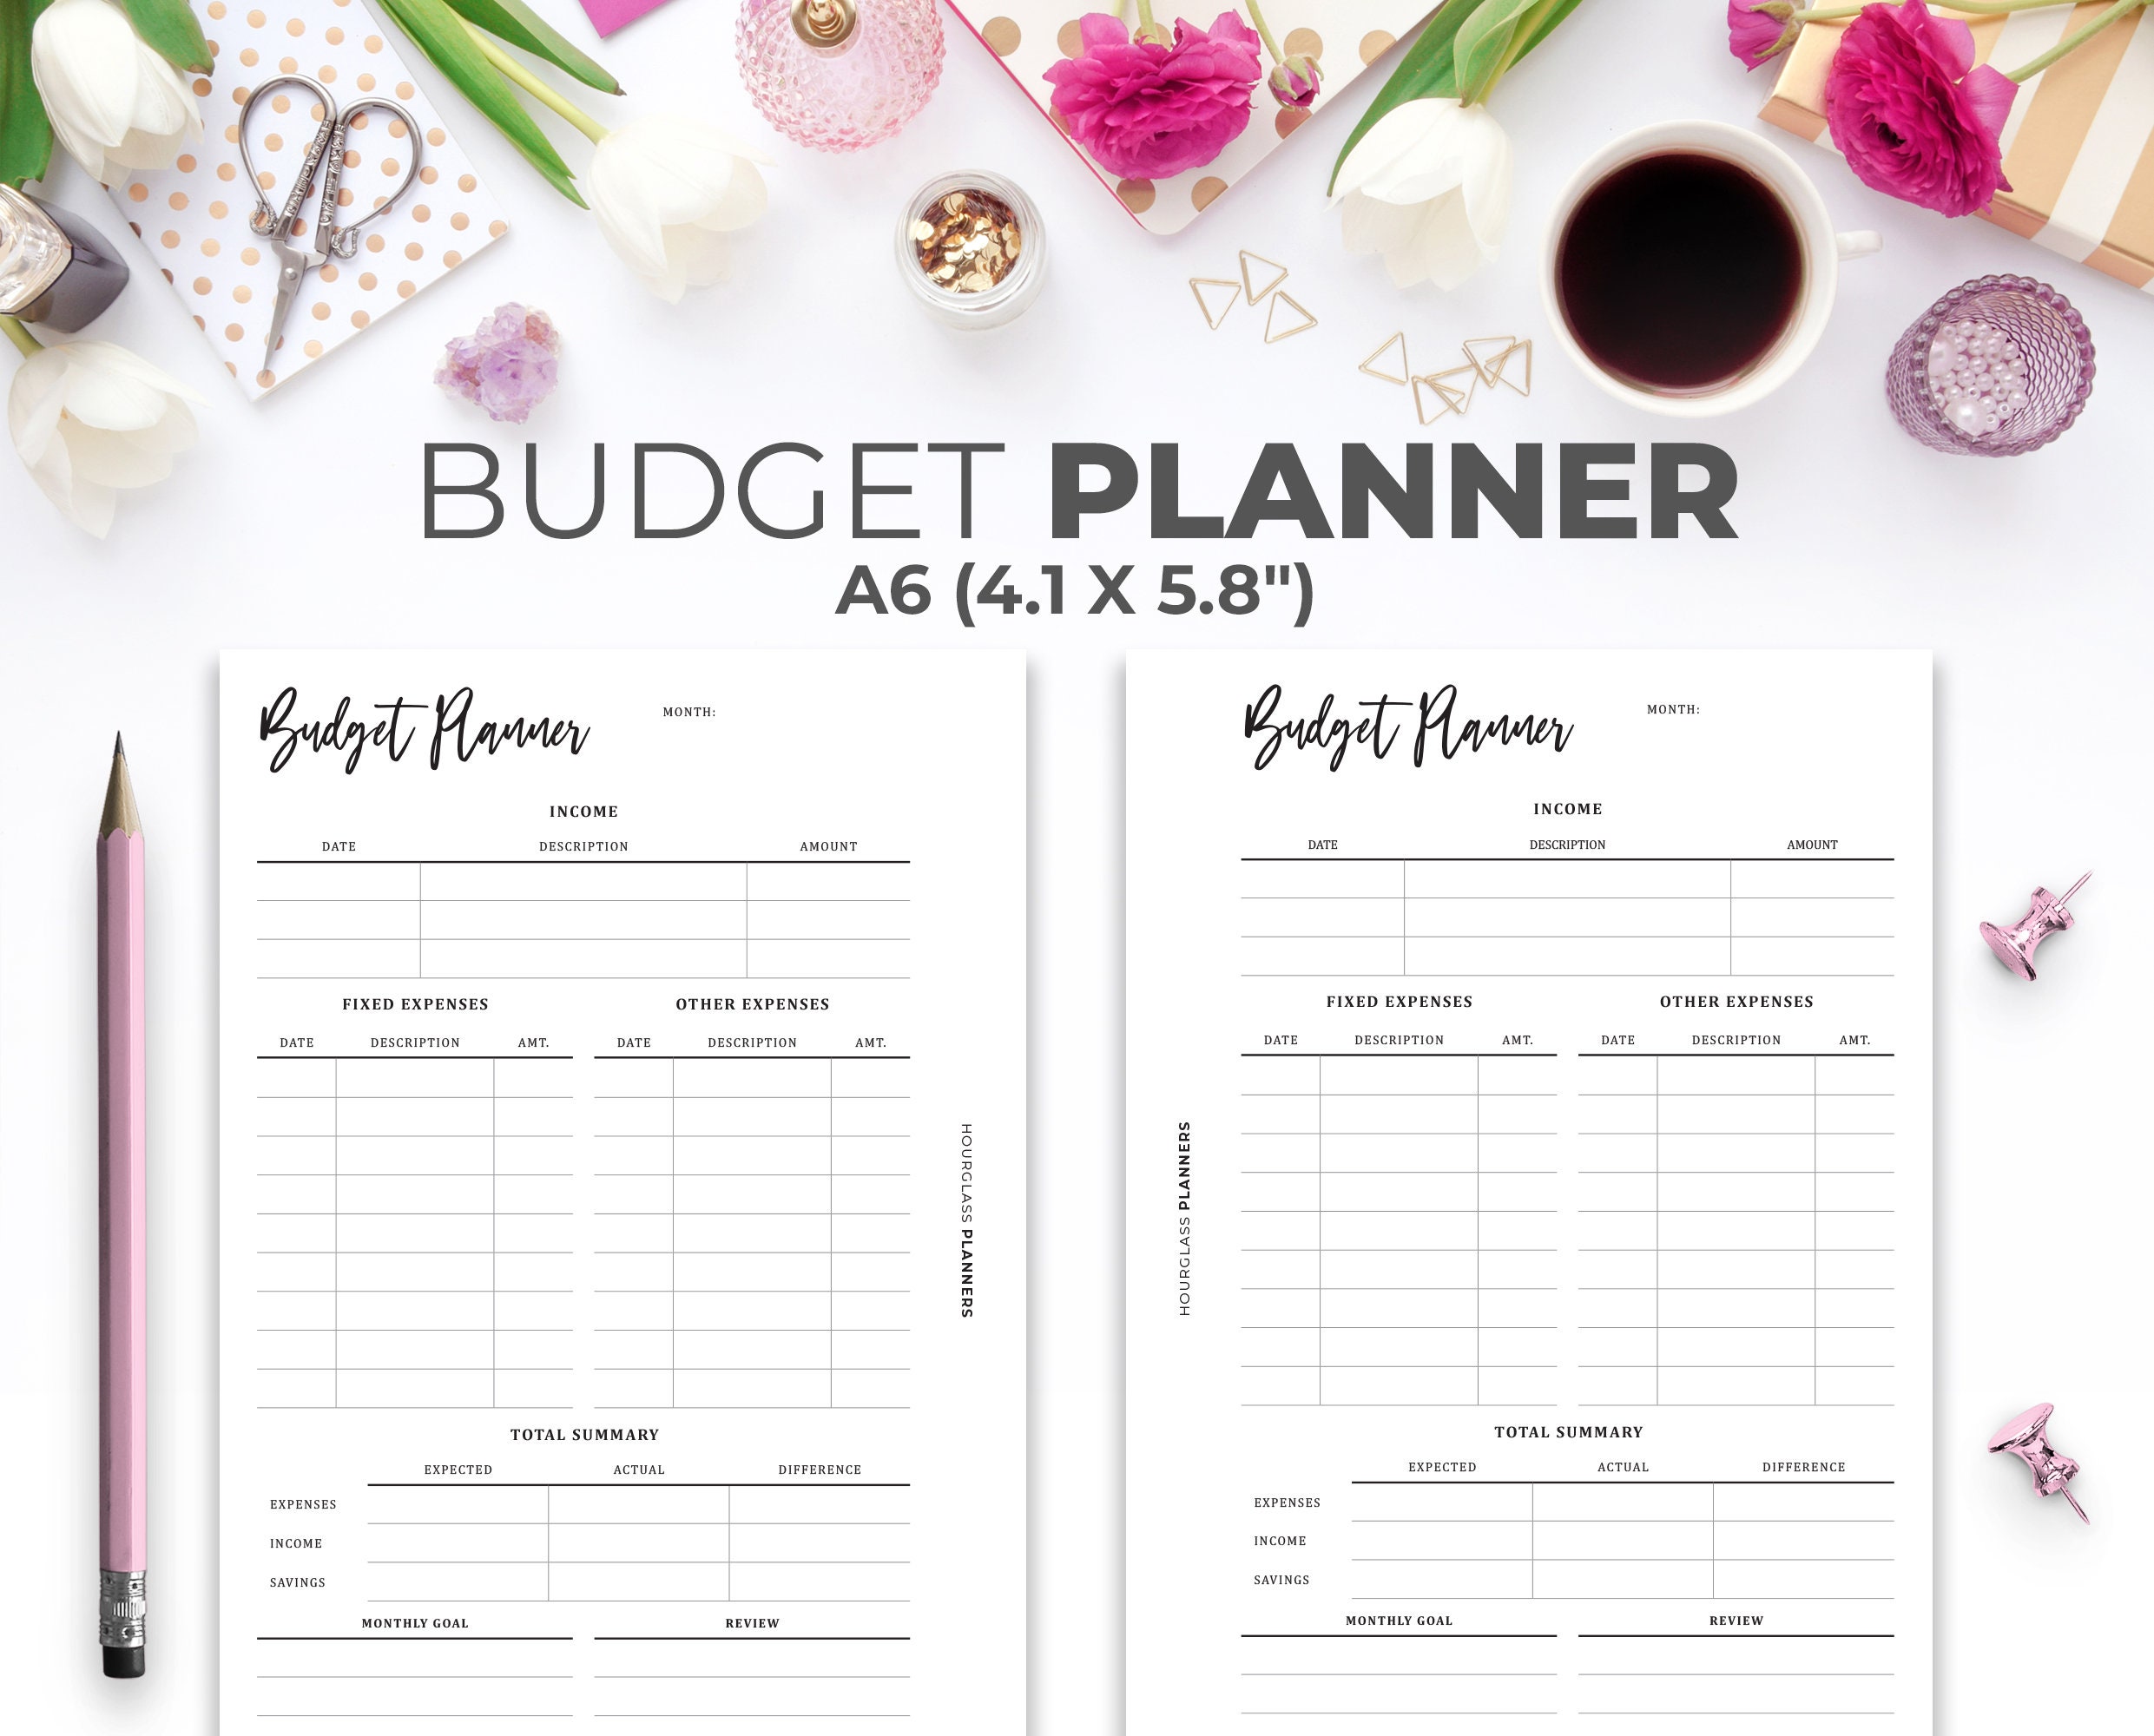 ANYUKE Budget Planner, A6 Classeur Budget, Enveloppe Budget